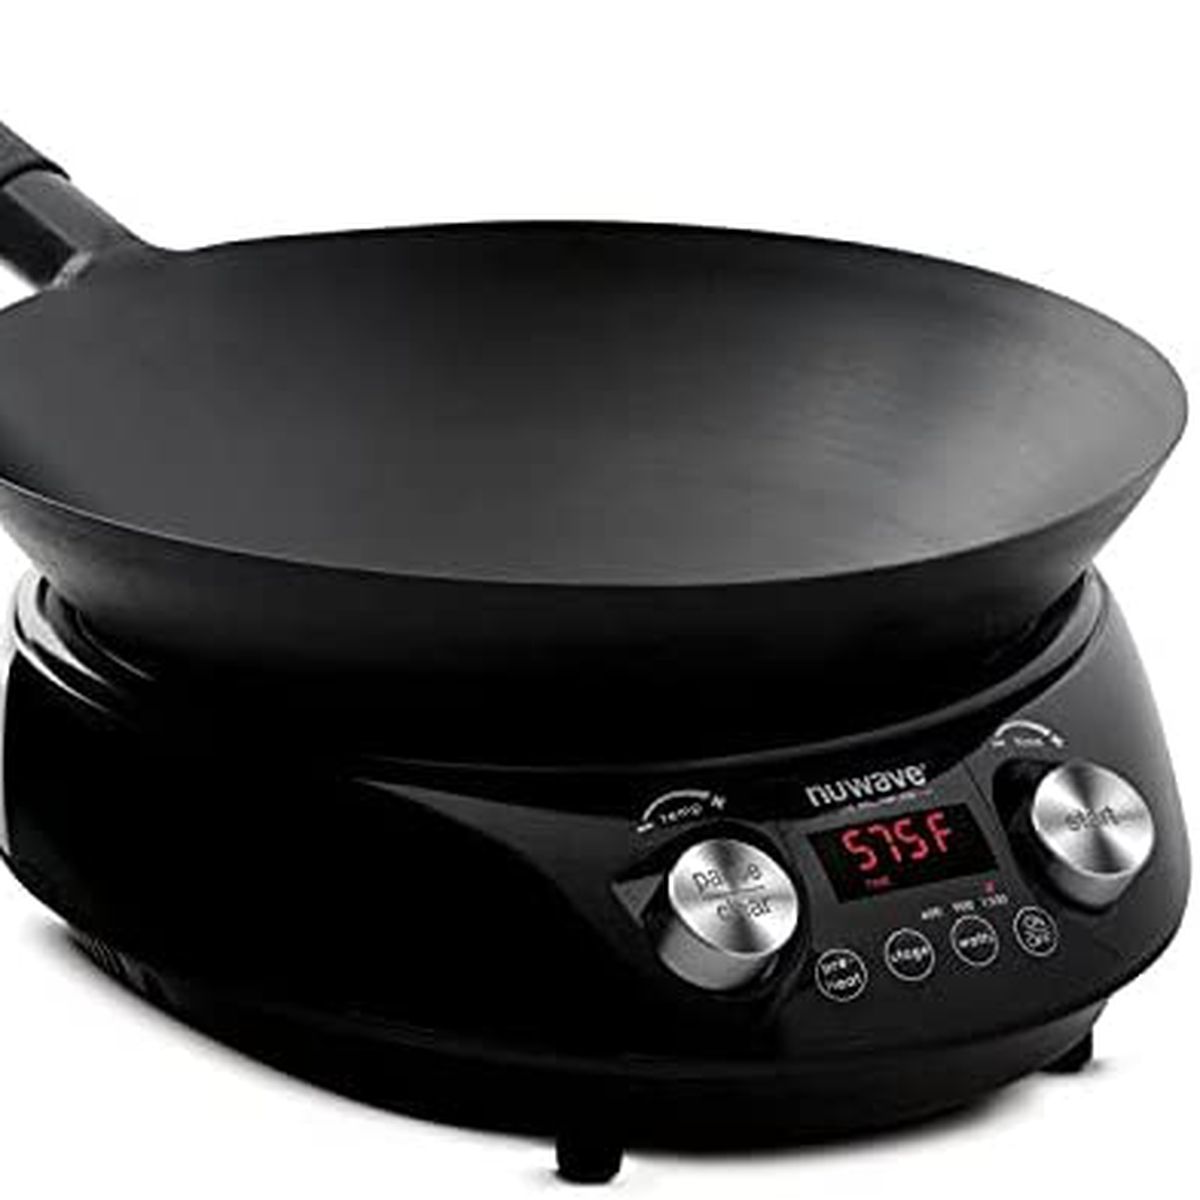 An induction wok